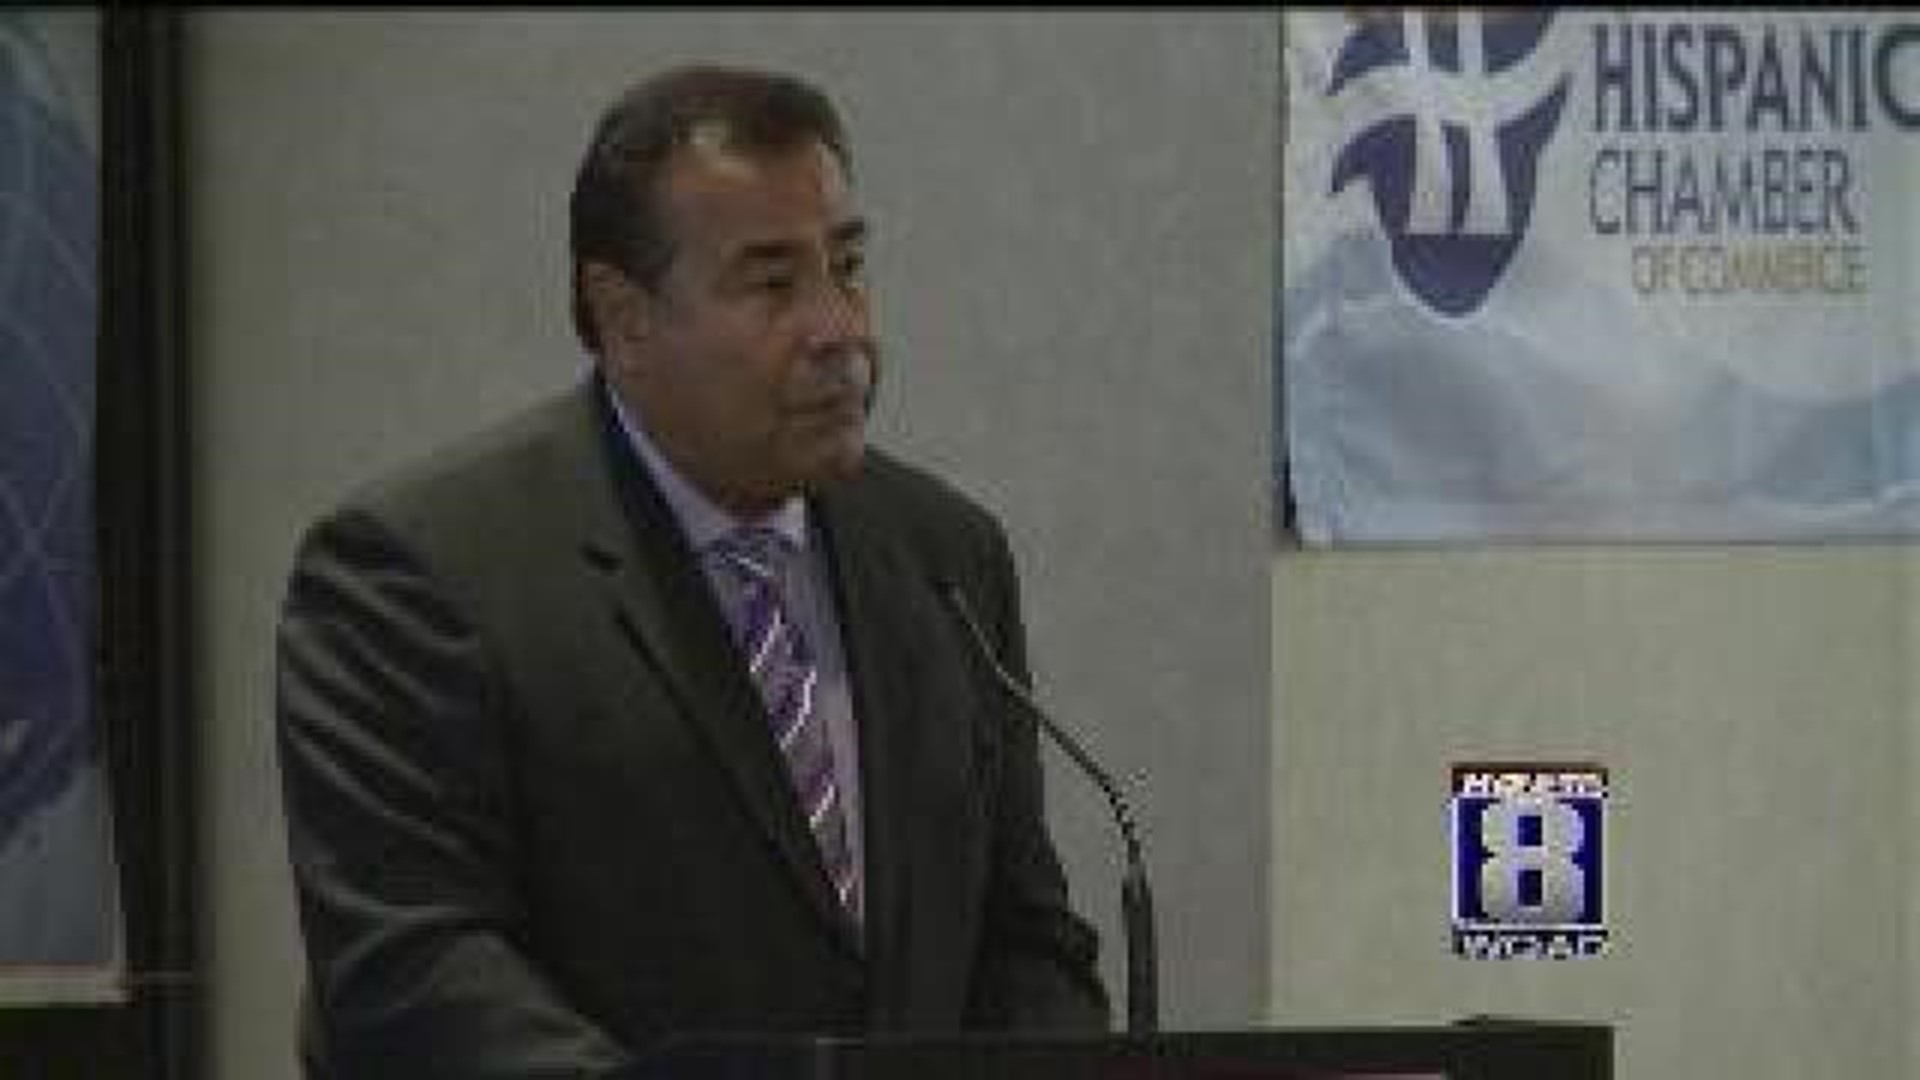 ABC’s John Quinones speaks to QC Hispanic Chamber of Commerce